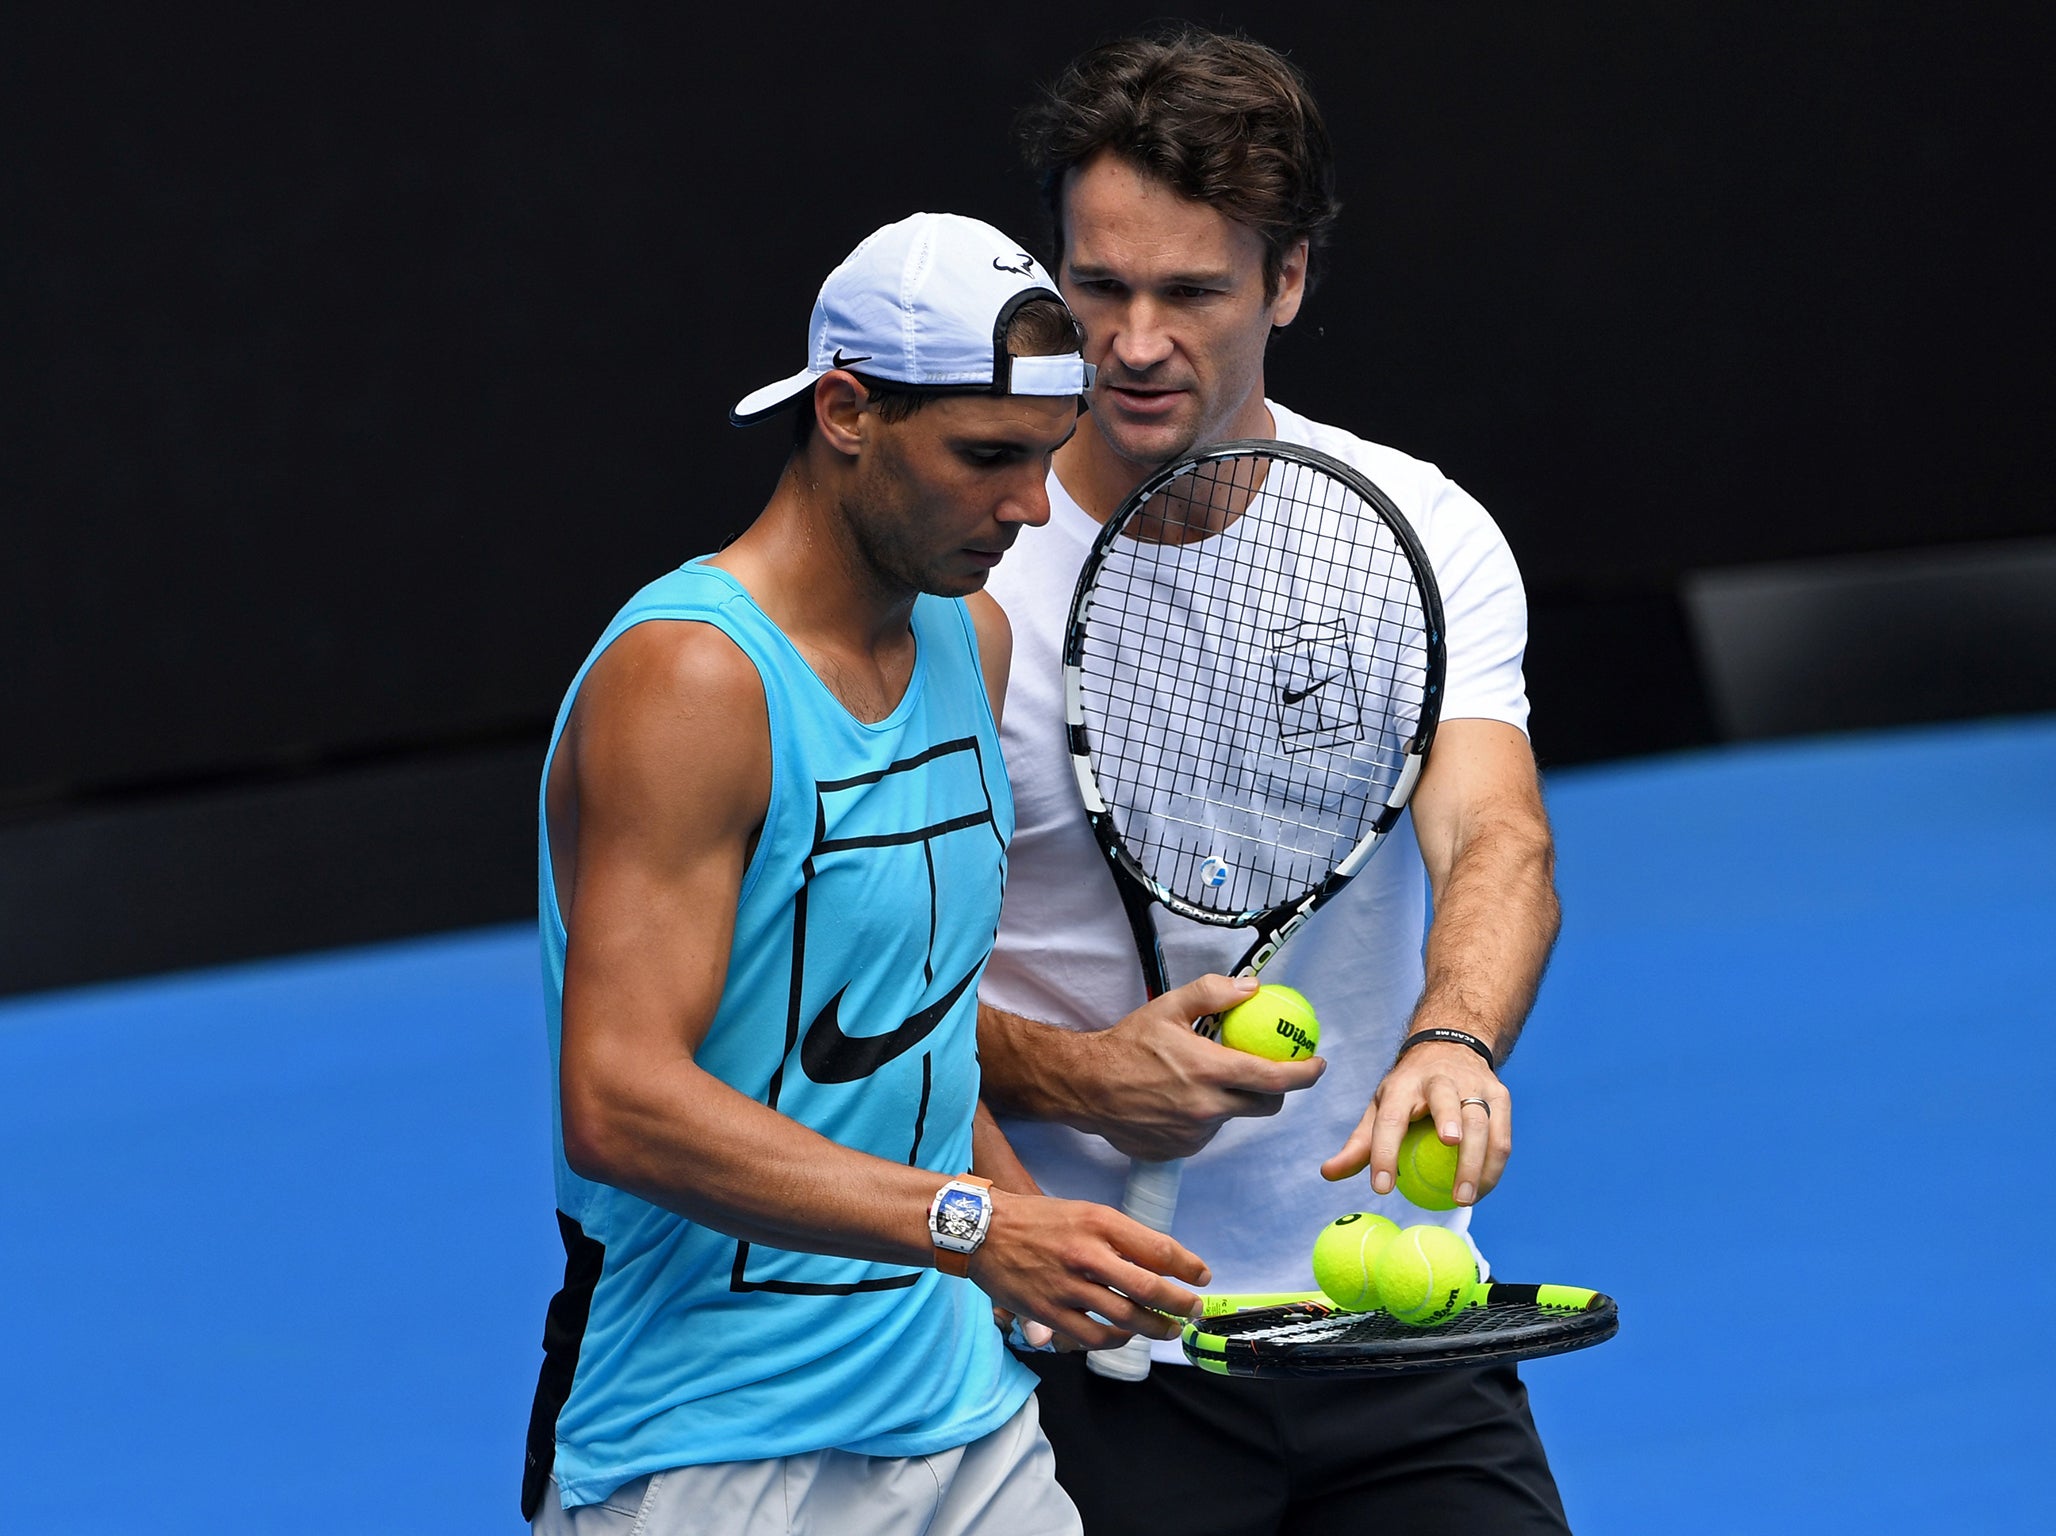 Moya coaching Nadal at this year's Australian Open